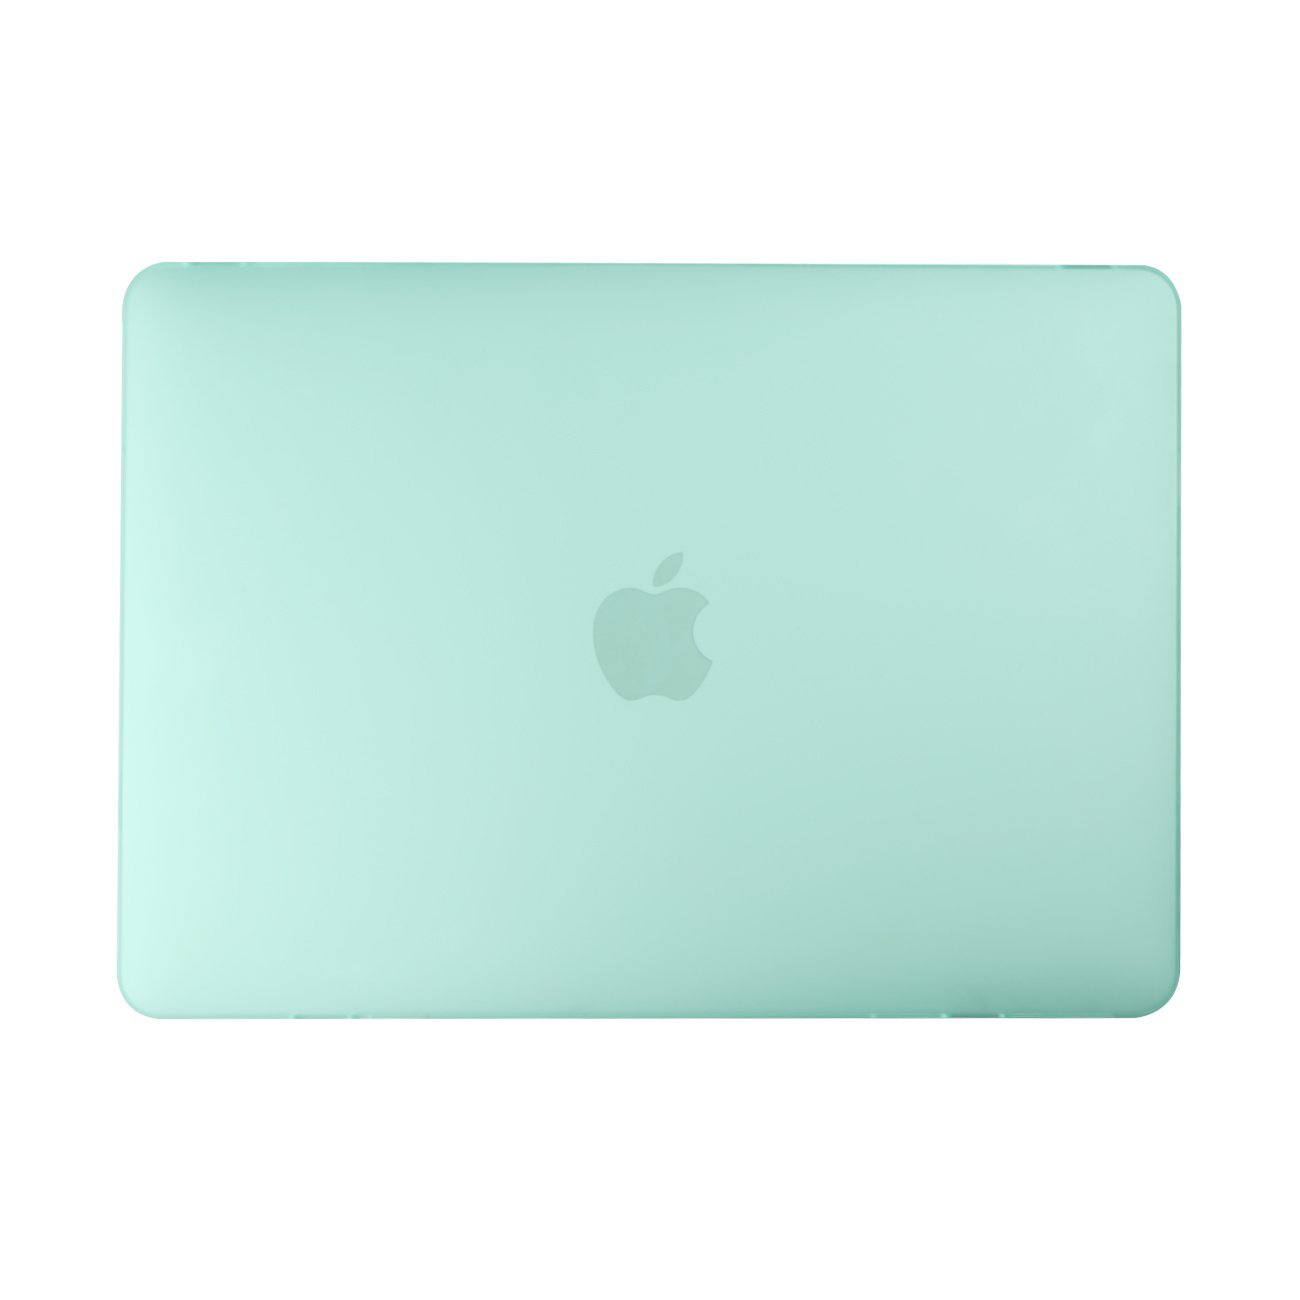 macbook case, macbook cases, new macbook cases 12 inch macbook case